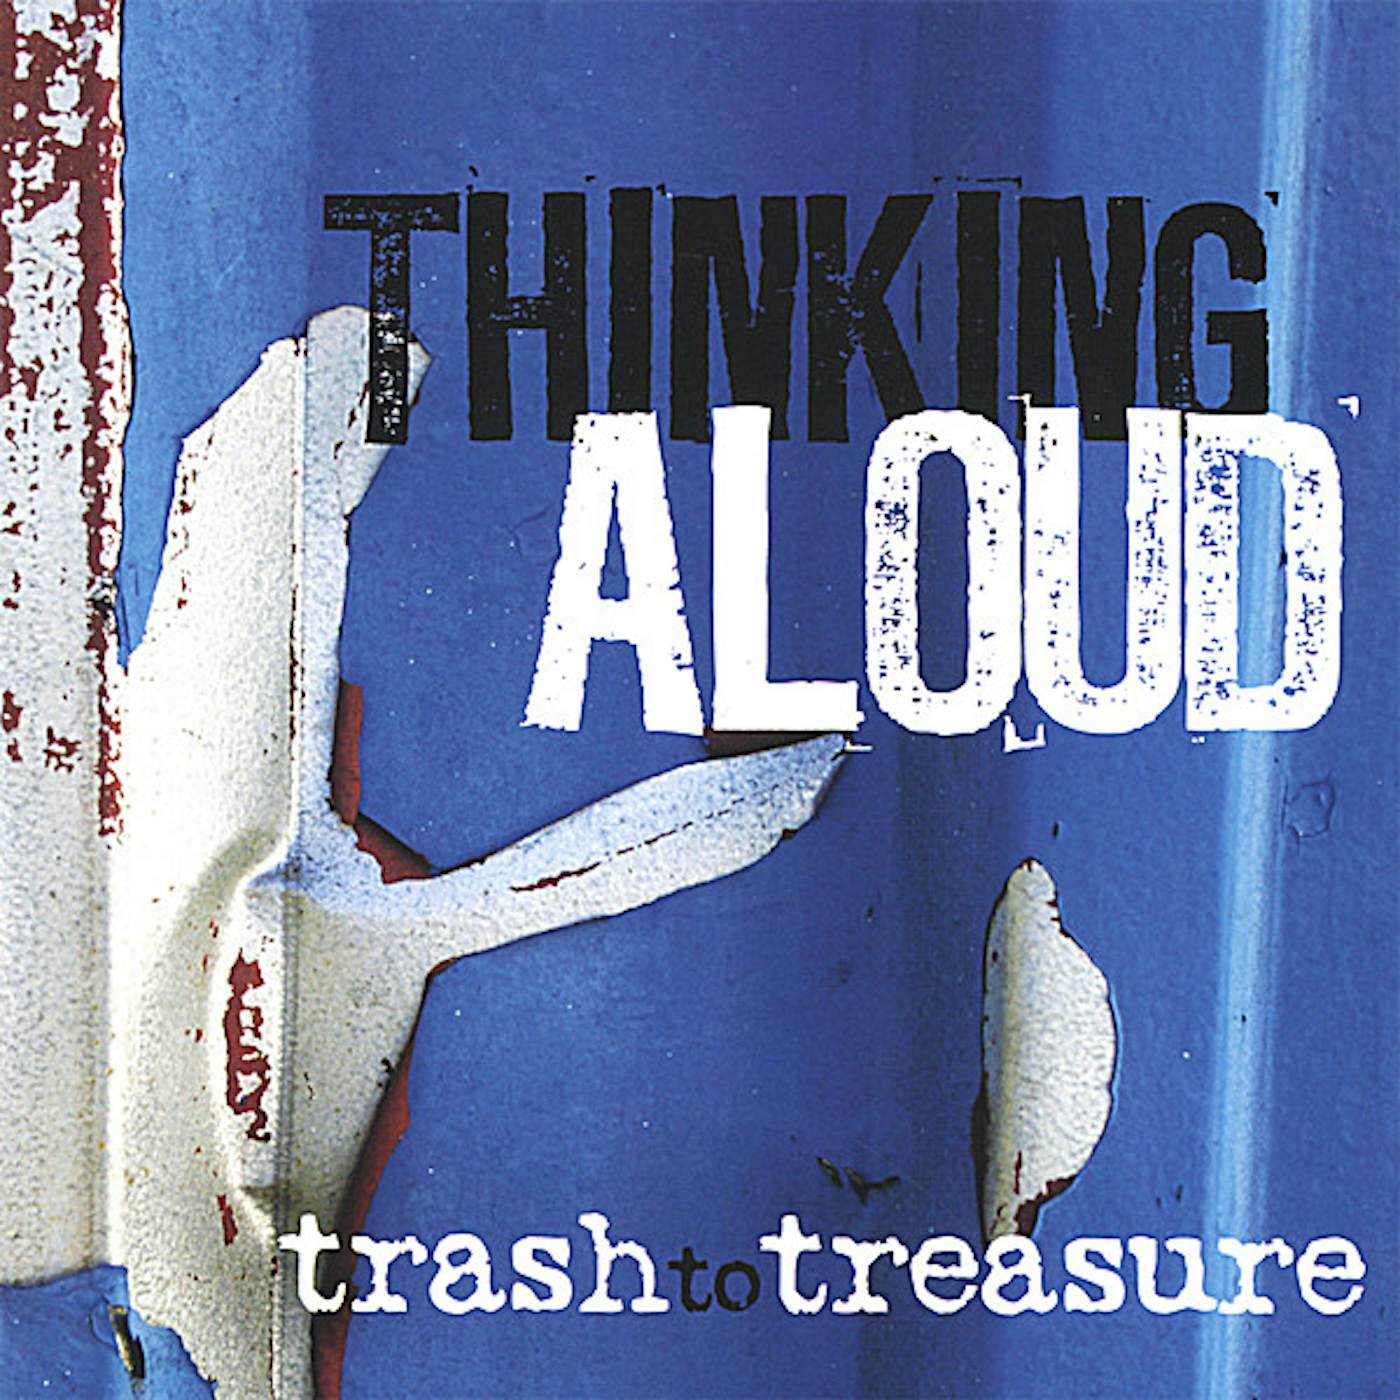 Thinking Aloud TRASH TO TREASURE CD